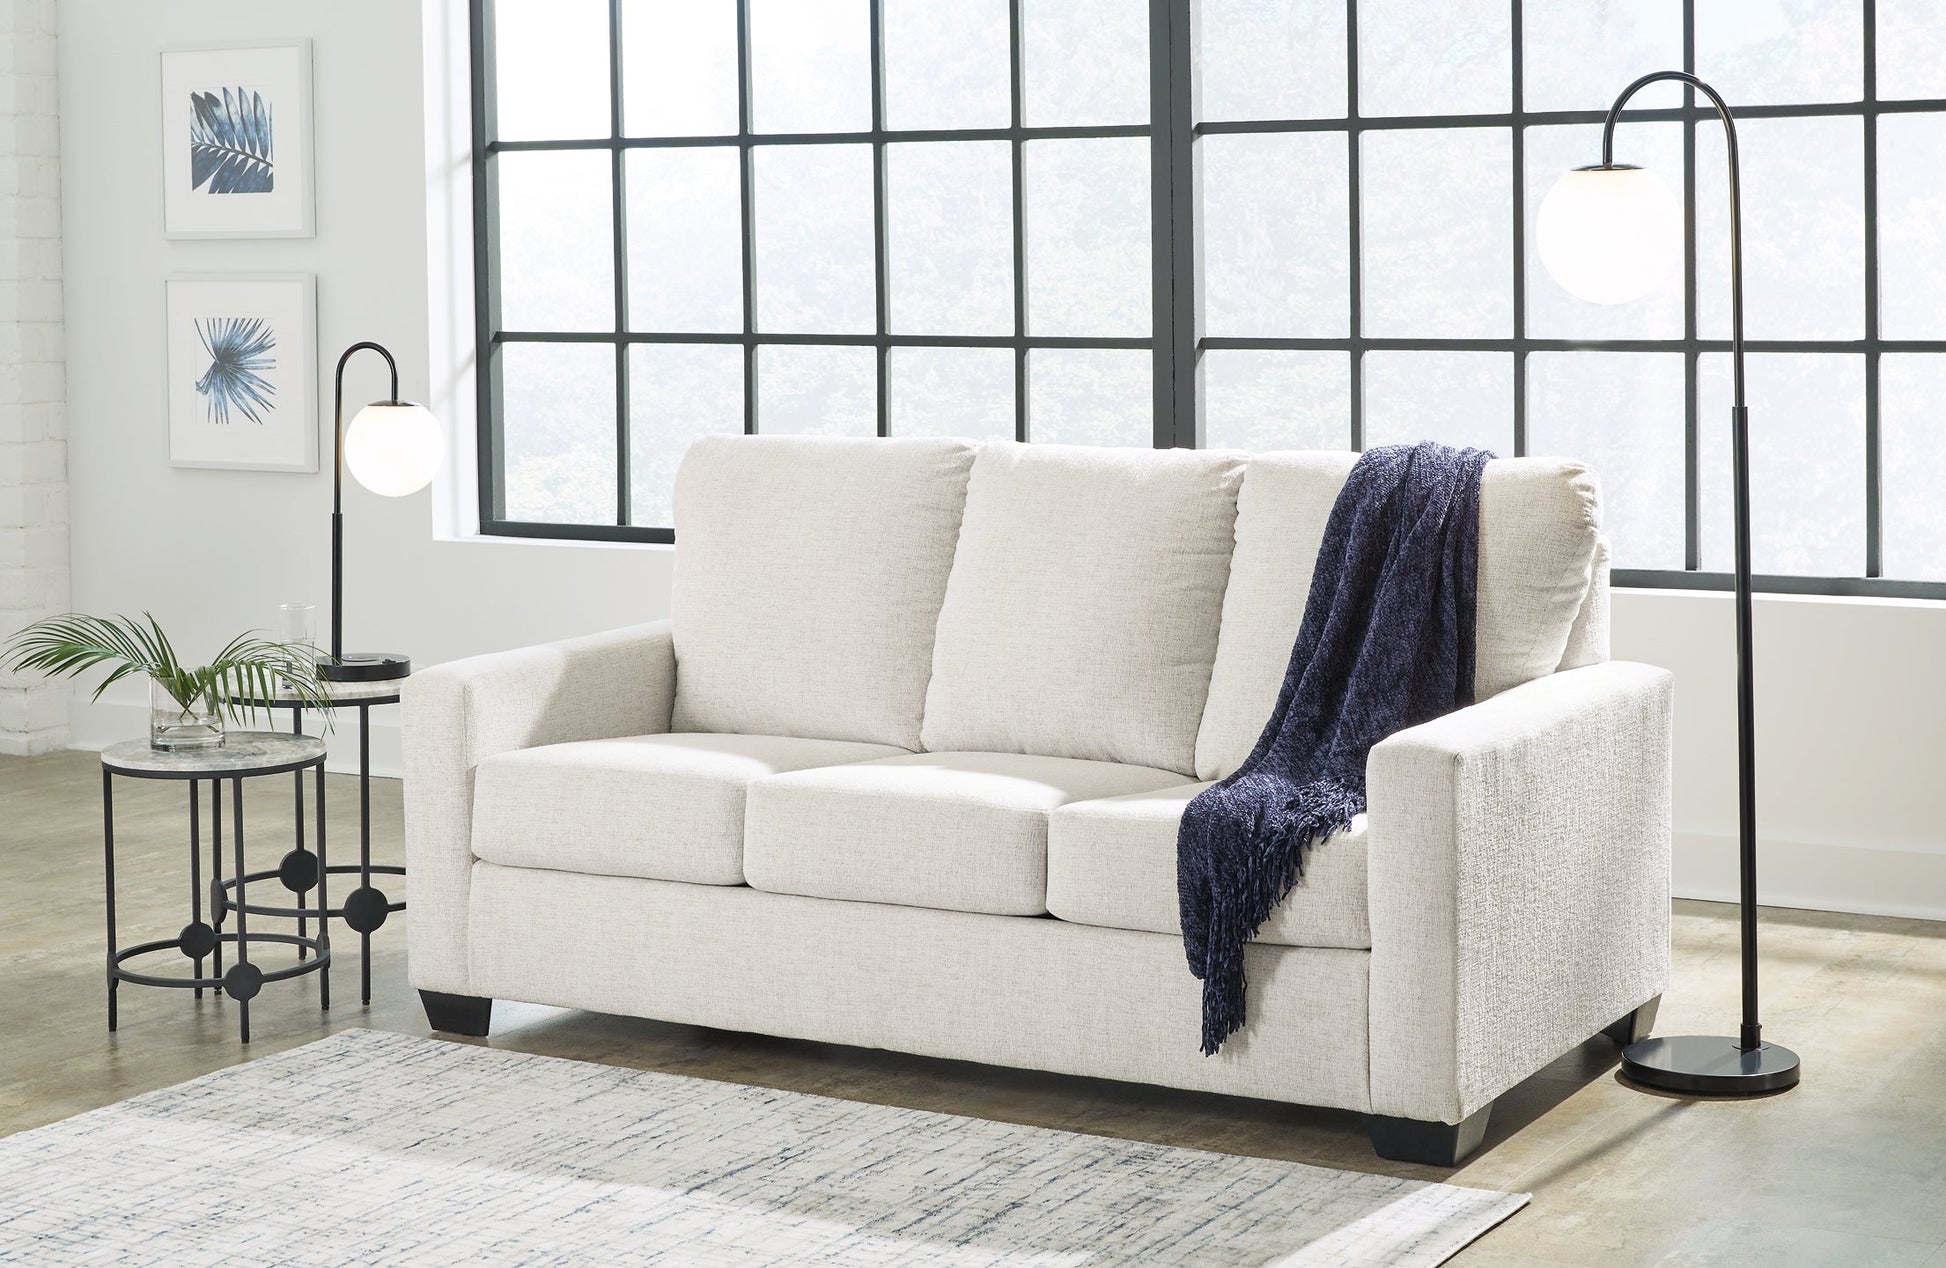 Rannis Full Sofa Sleeper at Cloud 9 Mattress & Furniture furniture, home furnishing, home decor